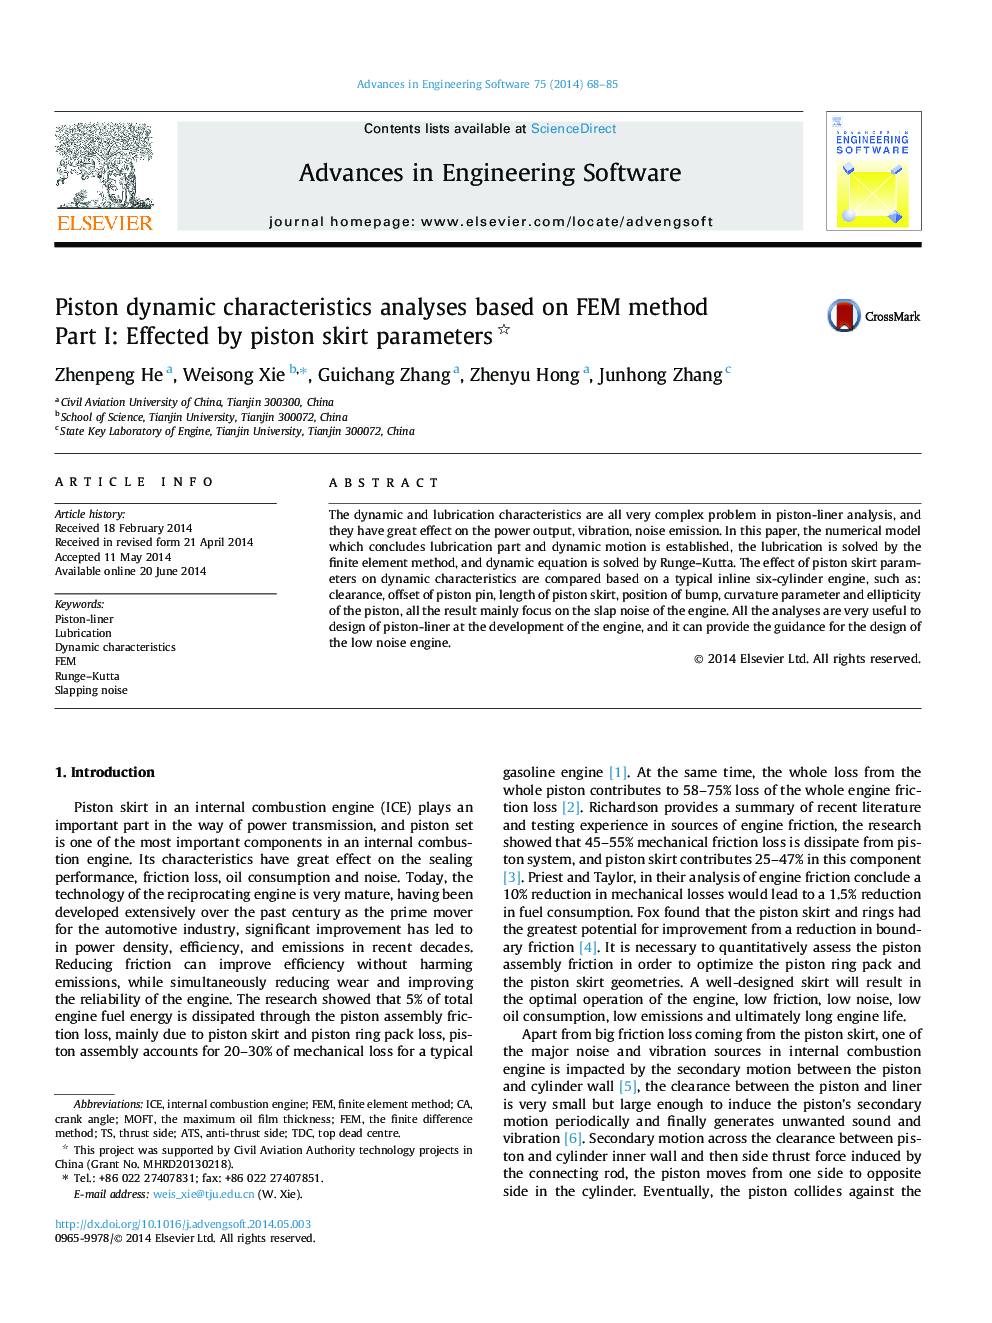 Piston dynamic characteristics analyses based on FEM method Part I: Effected by piston skirt parameters 